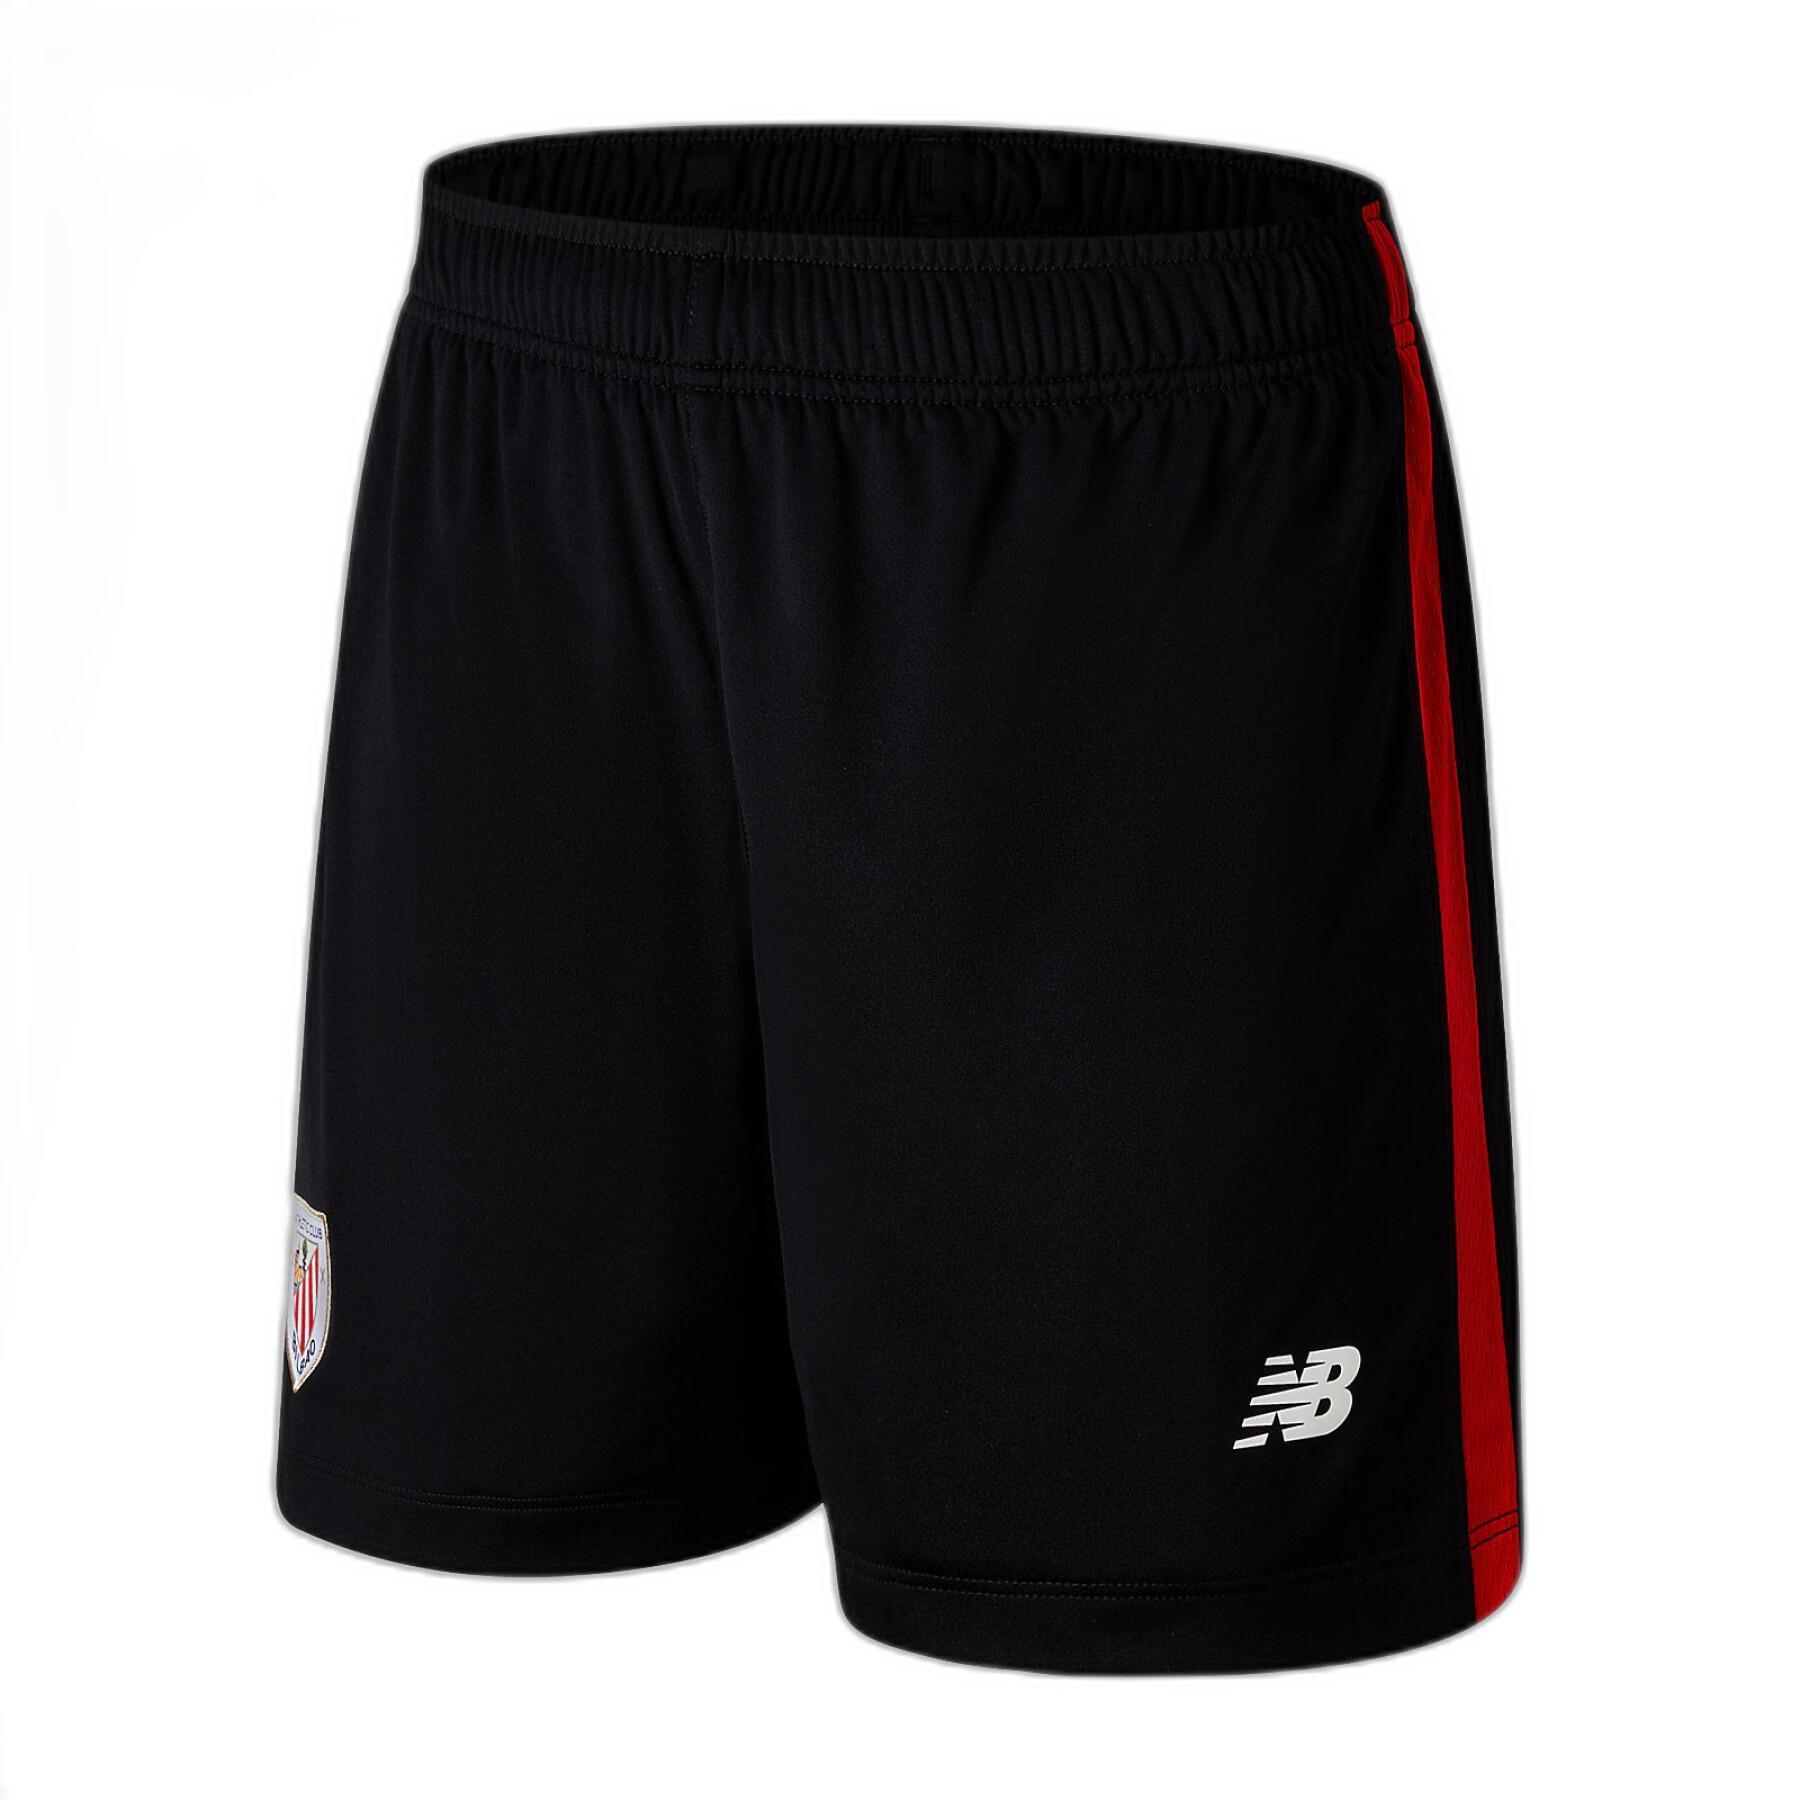 Home shorts Athletic Bilbao 2022/23